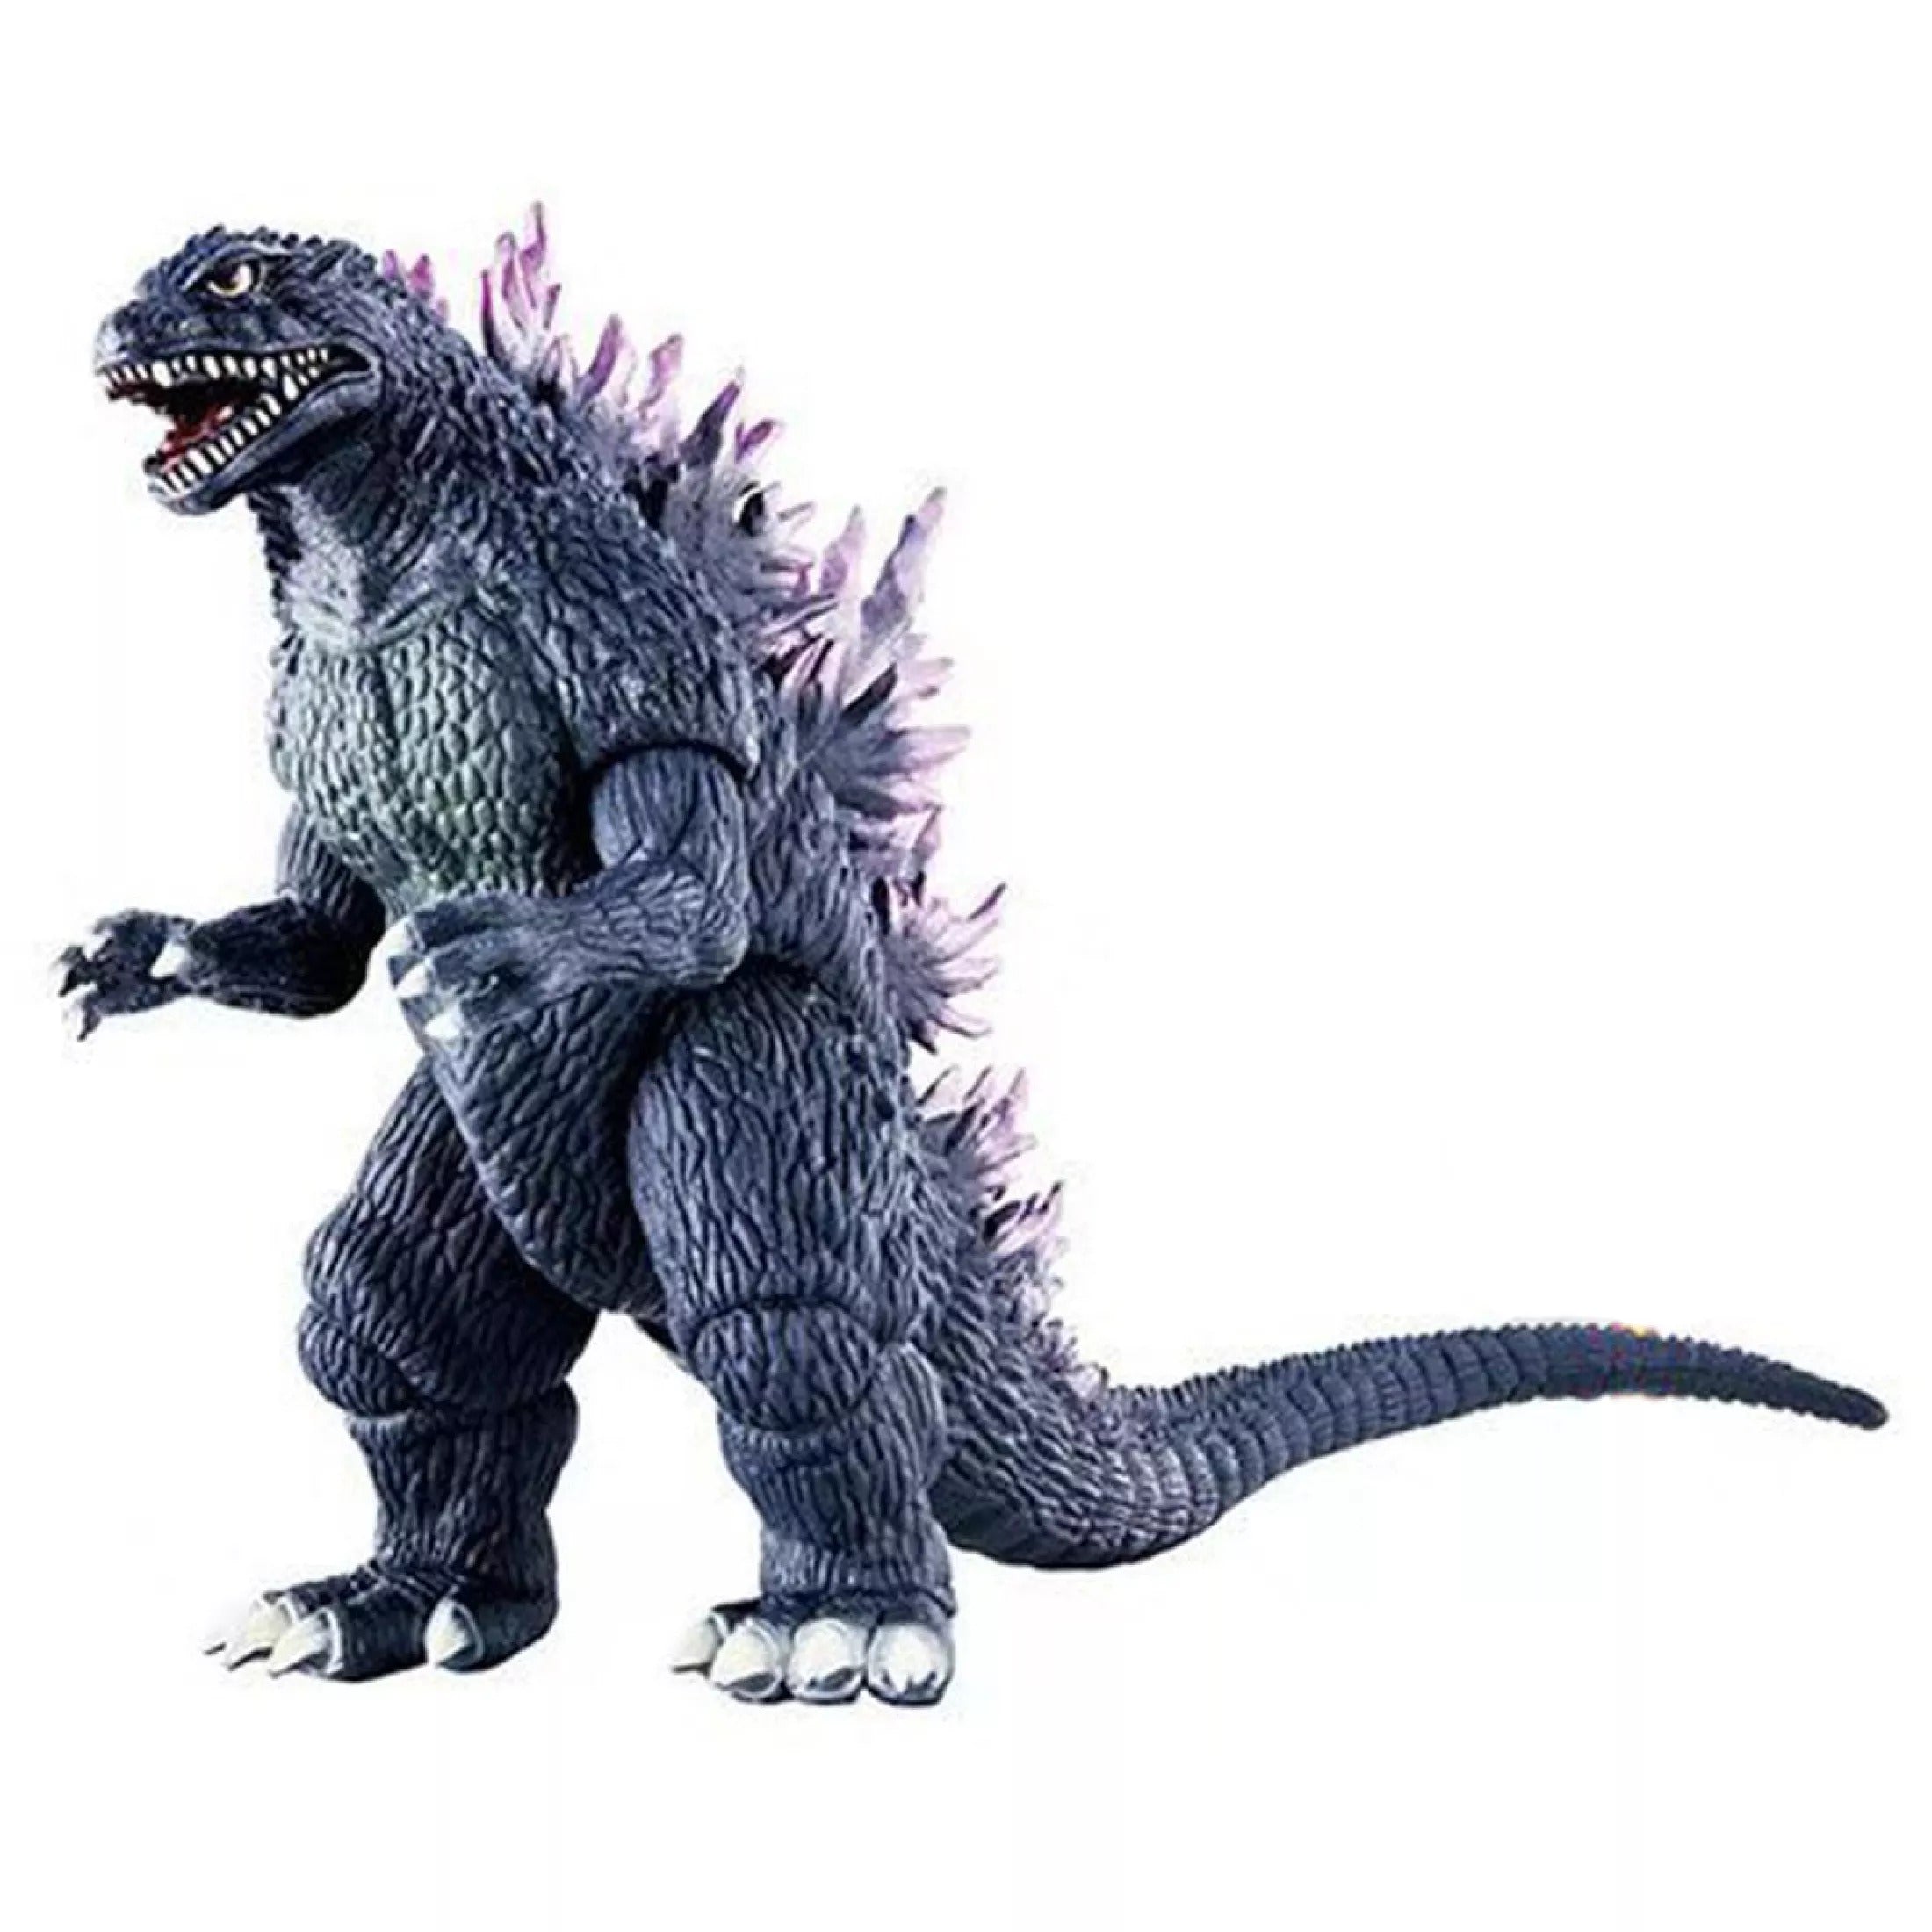 Bandai Godzilla Movie Monster Series Millenium Godzilla 2016 Vinyl Figure